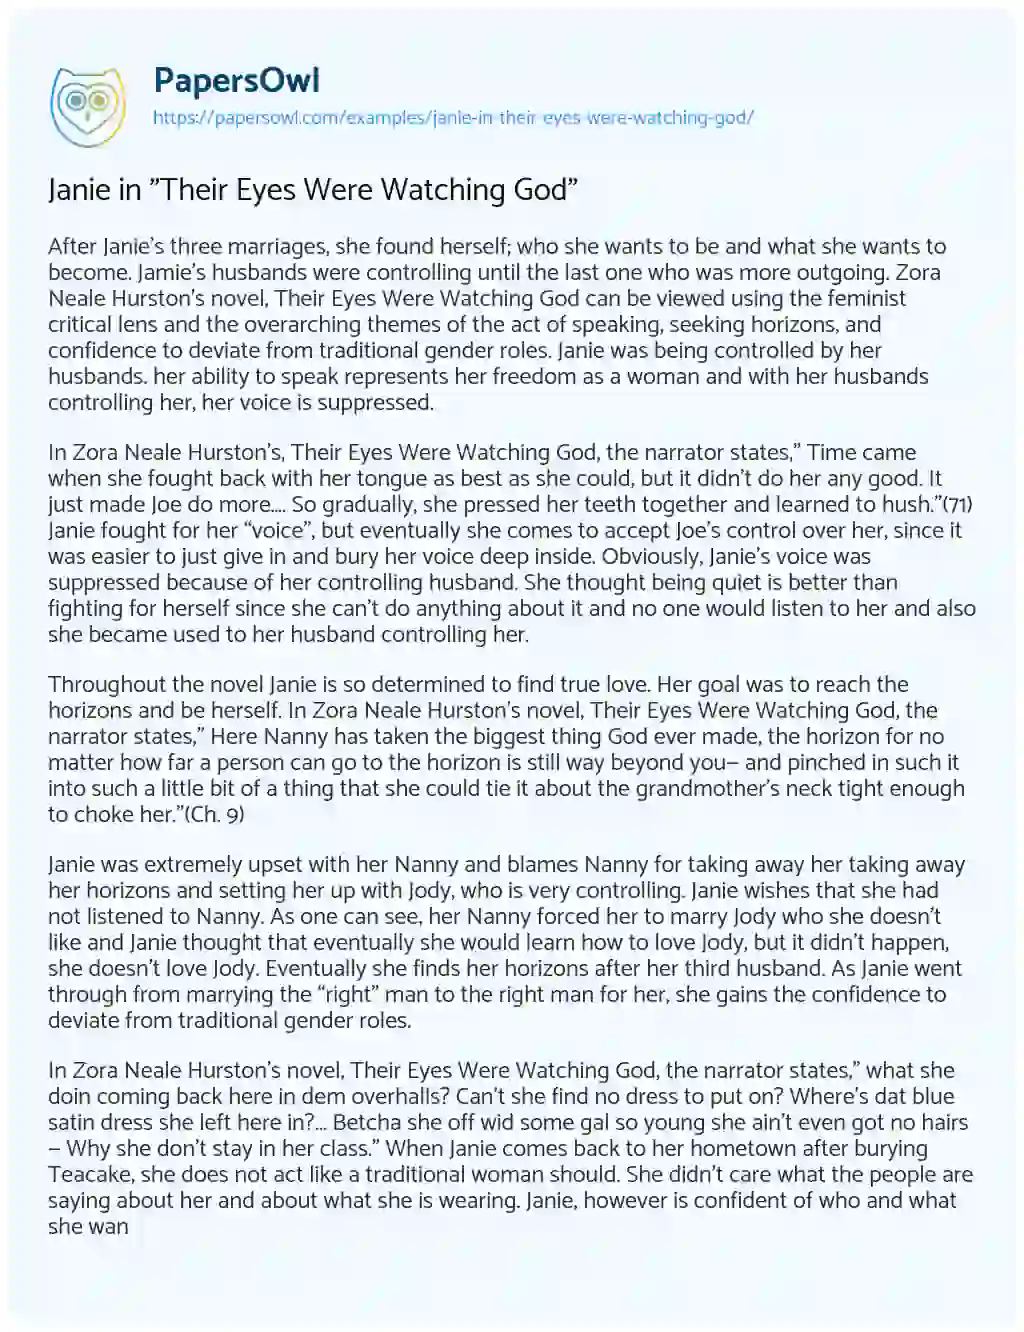 Janie in “Their Eyes were Watching God” essay